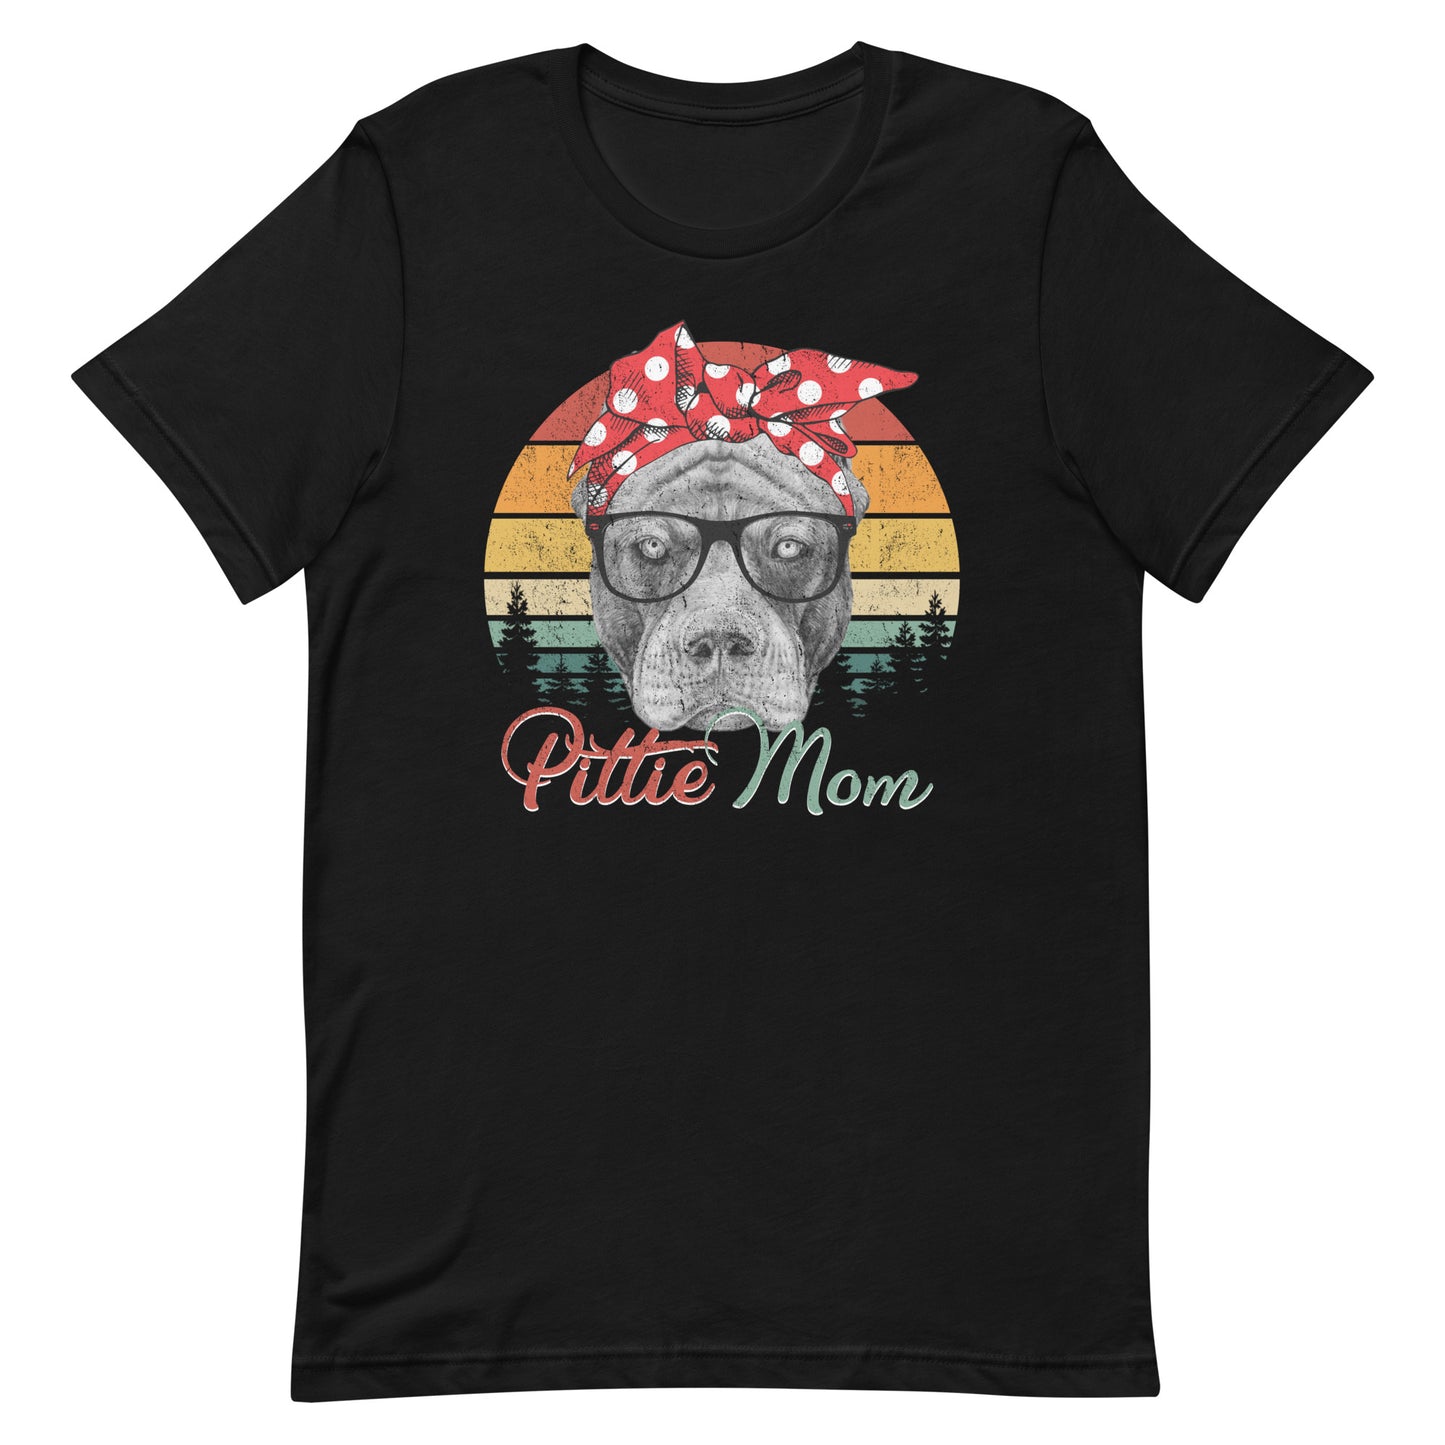 Pittie Mom - Pitbull Dog Mom T-Shirt